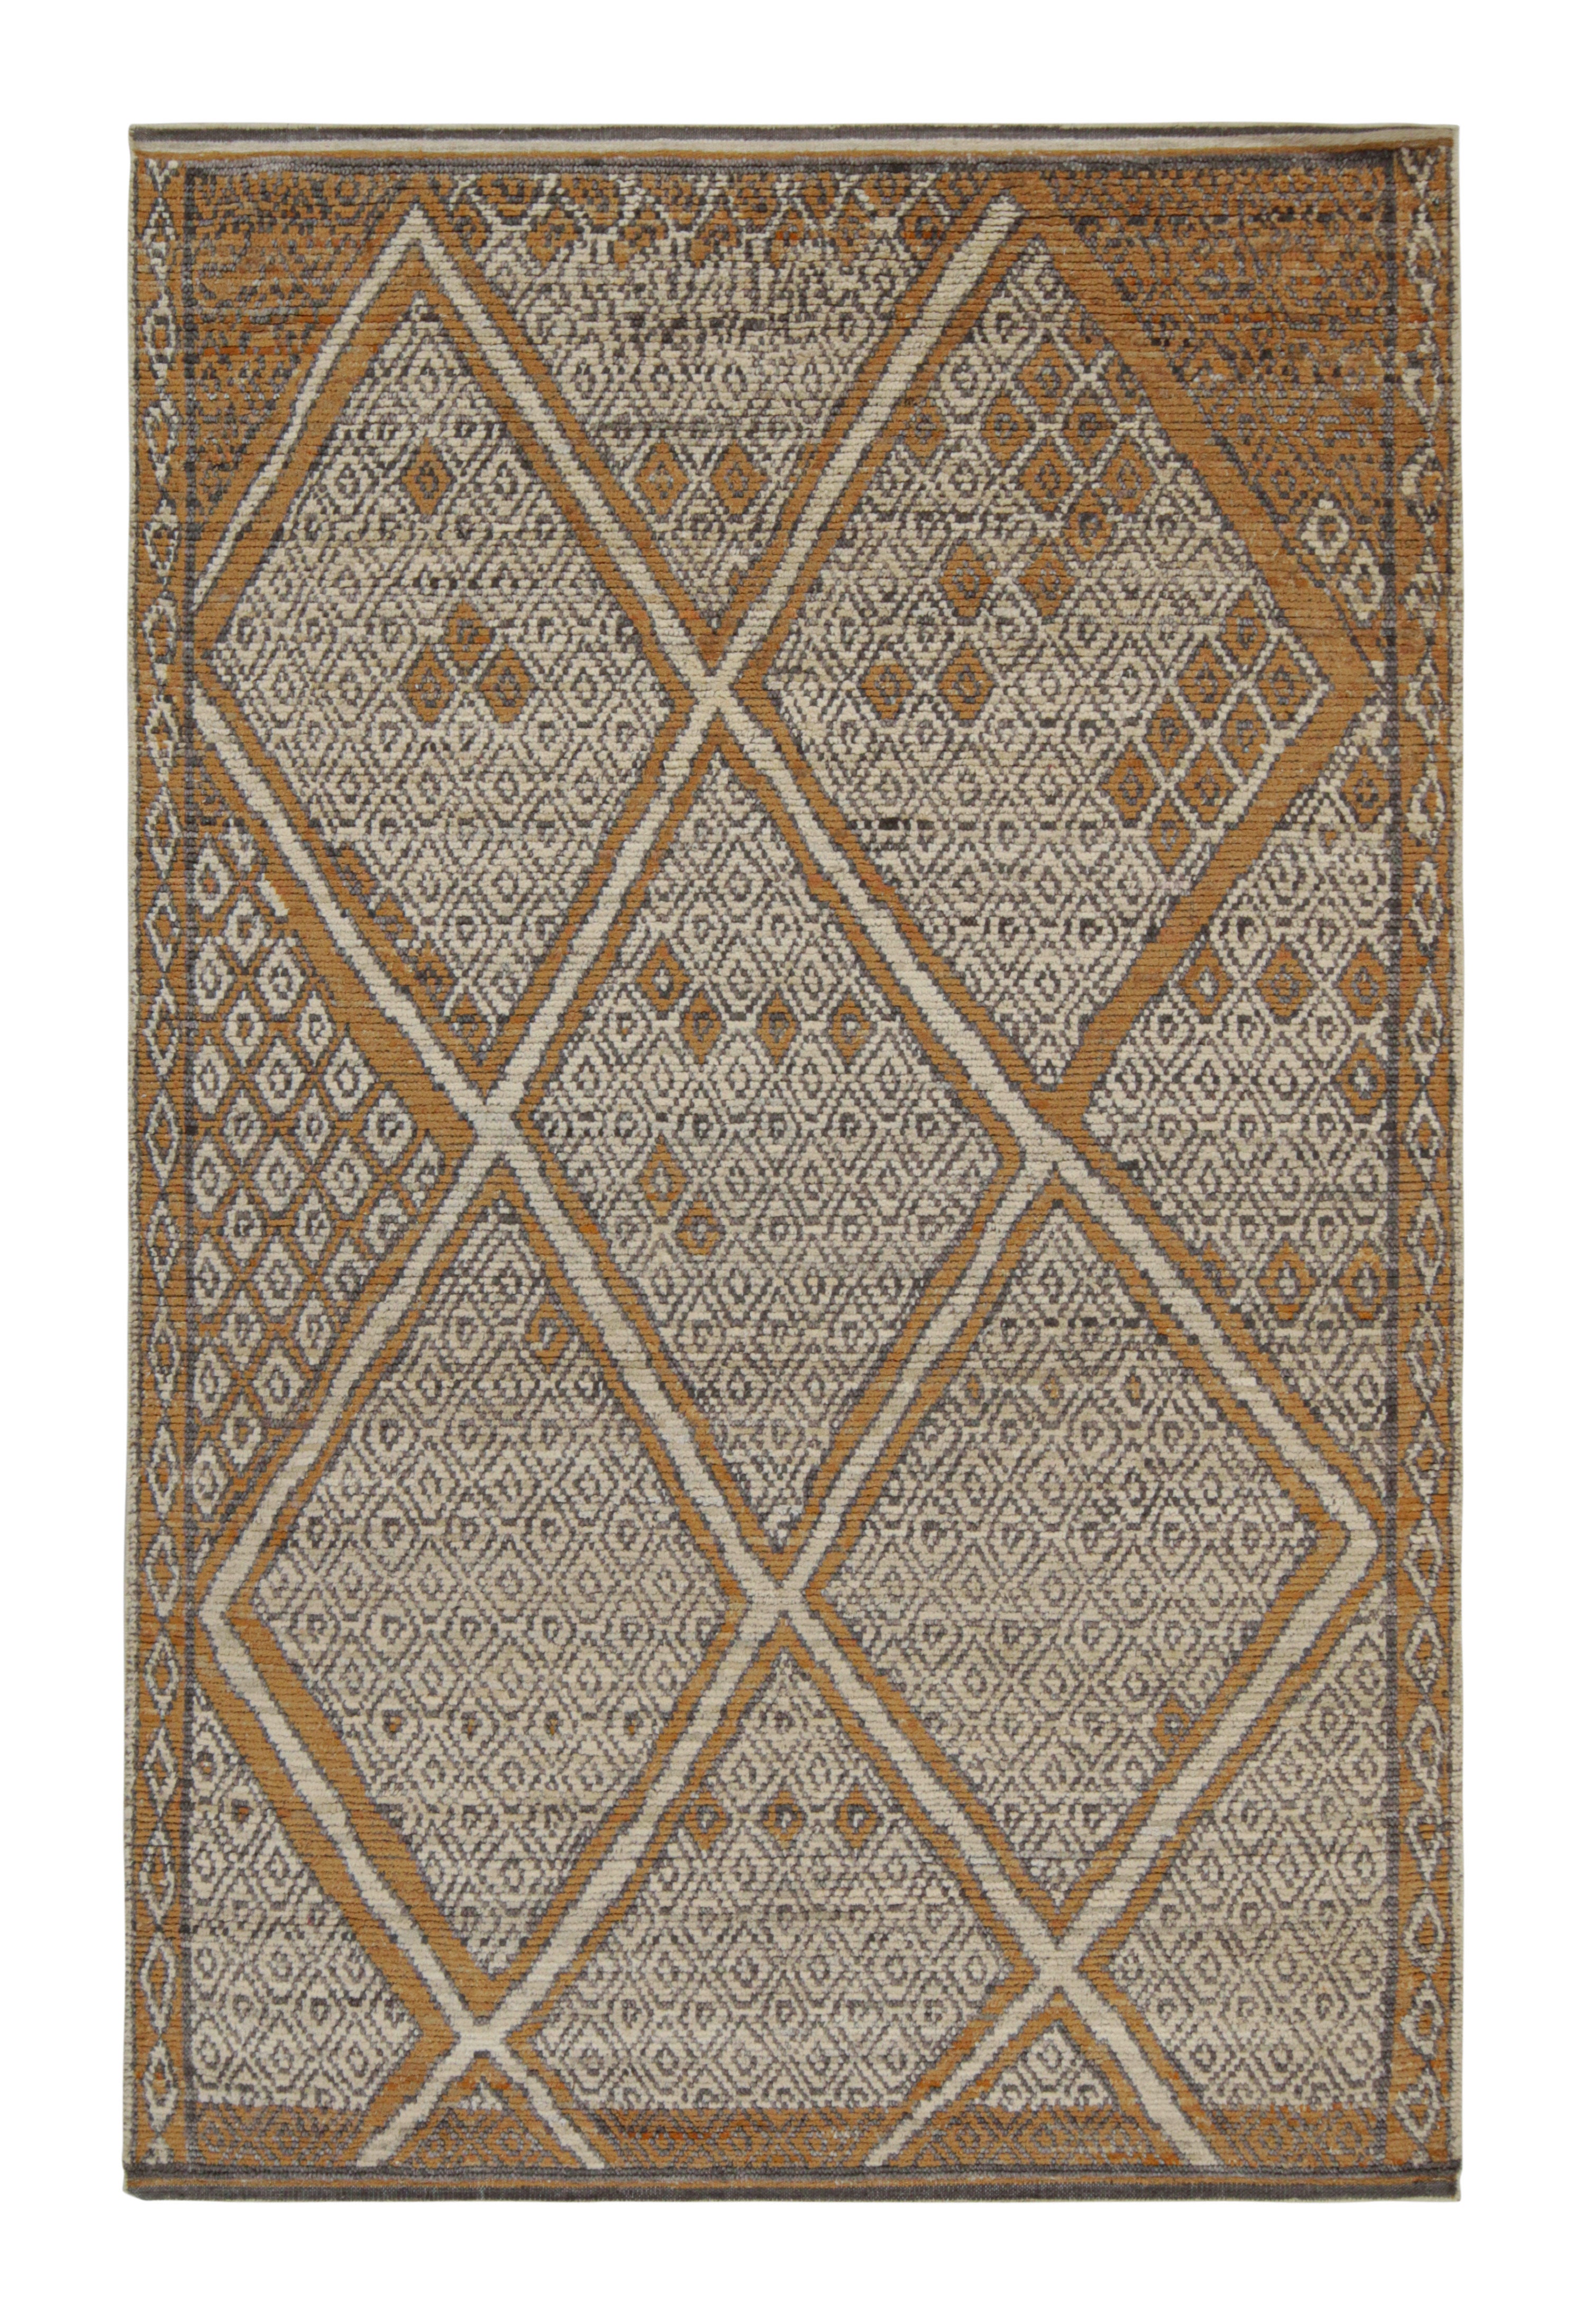 Rug & Kilim’s Moroccan Style Rug in Auburn Orange and White Diamond Patterns